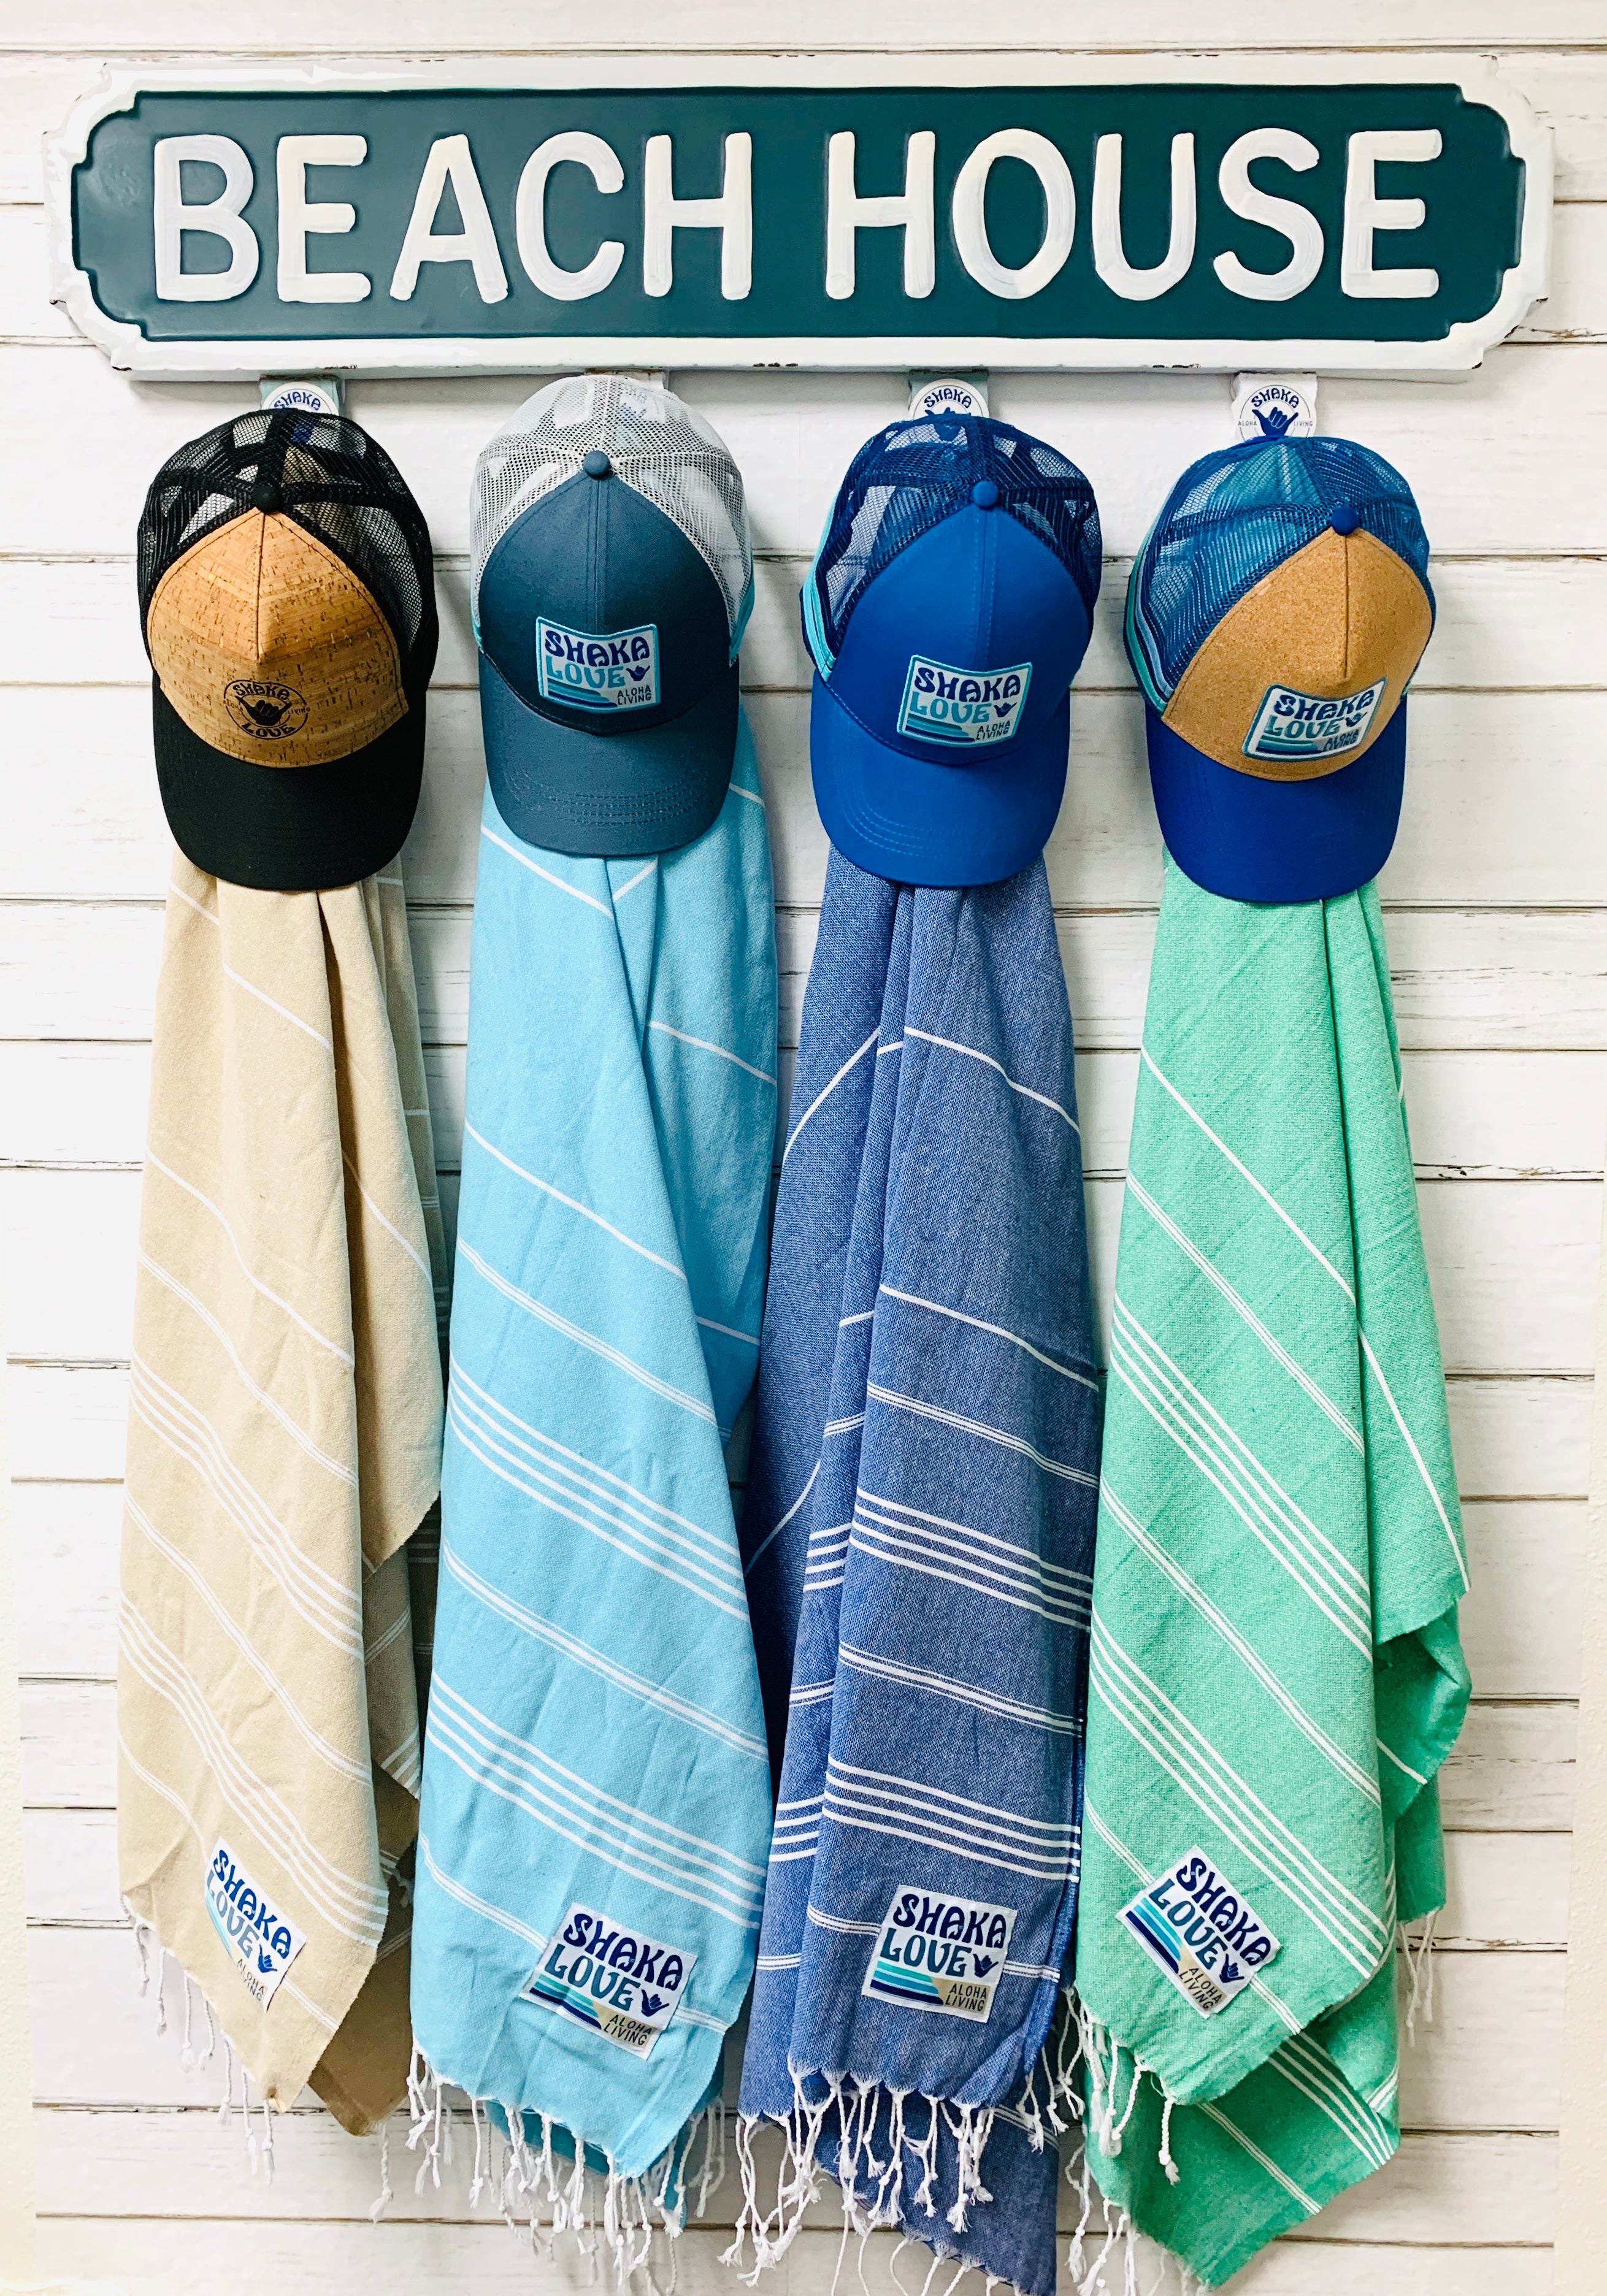 SHAKA CLASSIC Bundle 1: Includes FOUR top 4 Shaka Classic Beach Towels